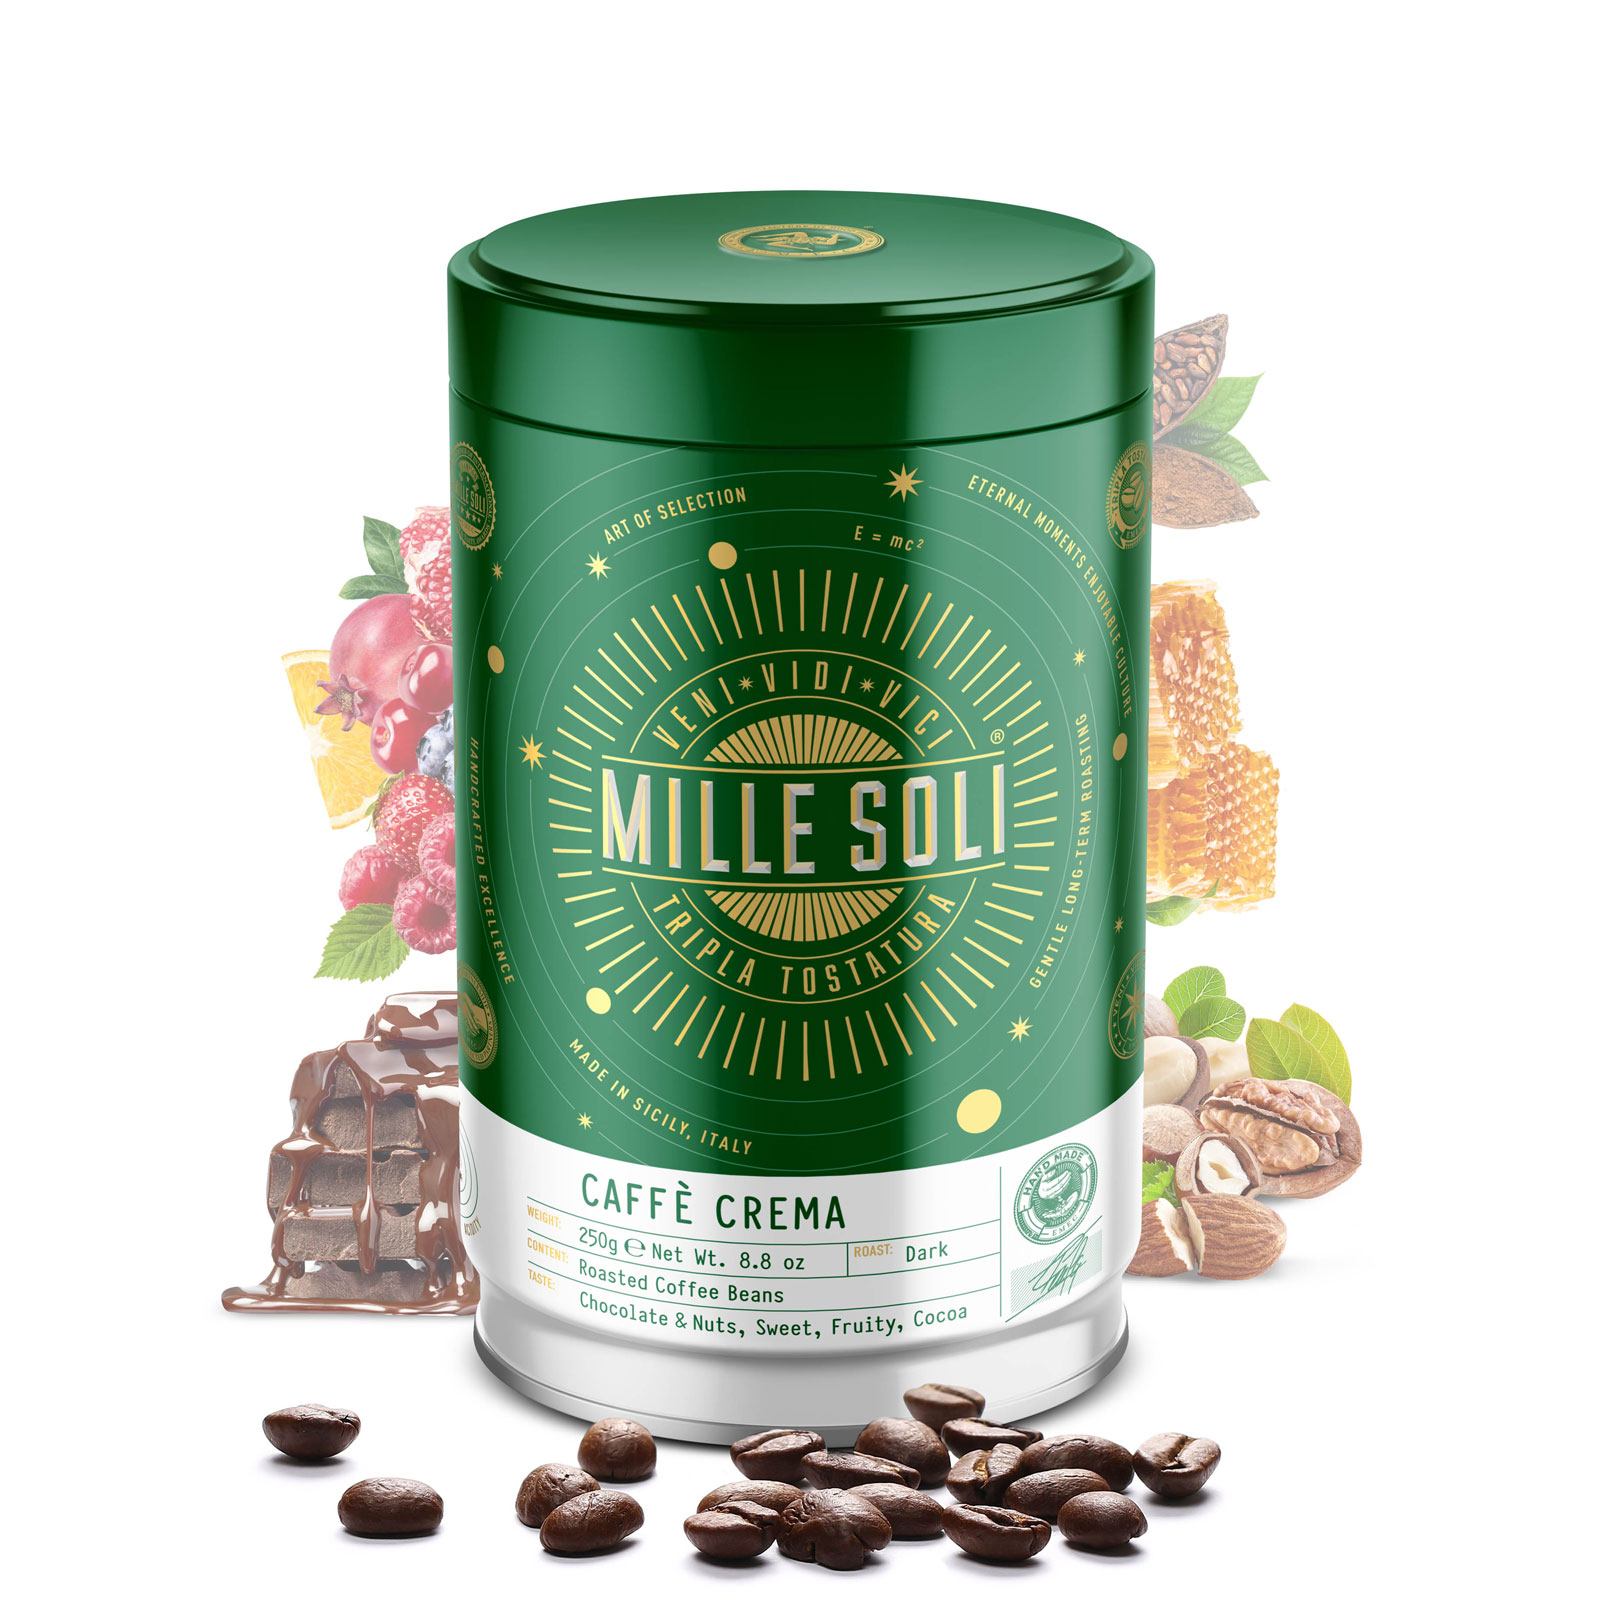 MILLE SOLI - Caffè Crema - 250g - Beans